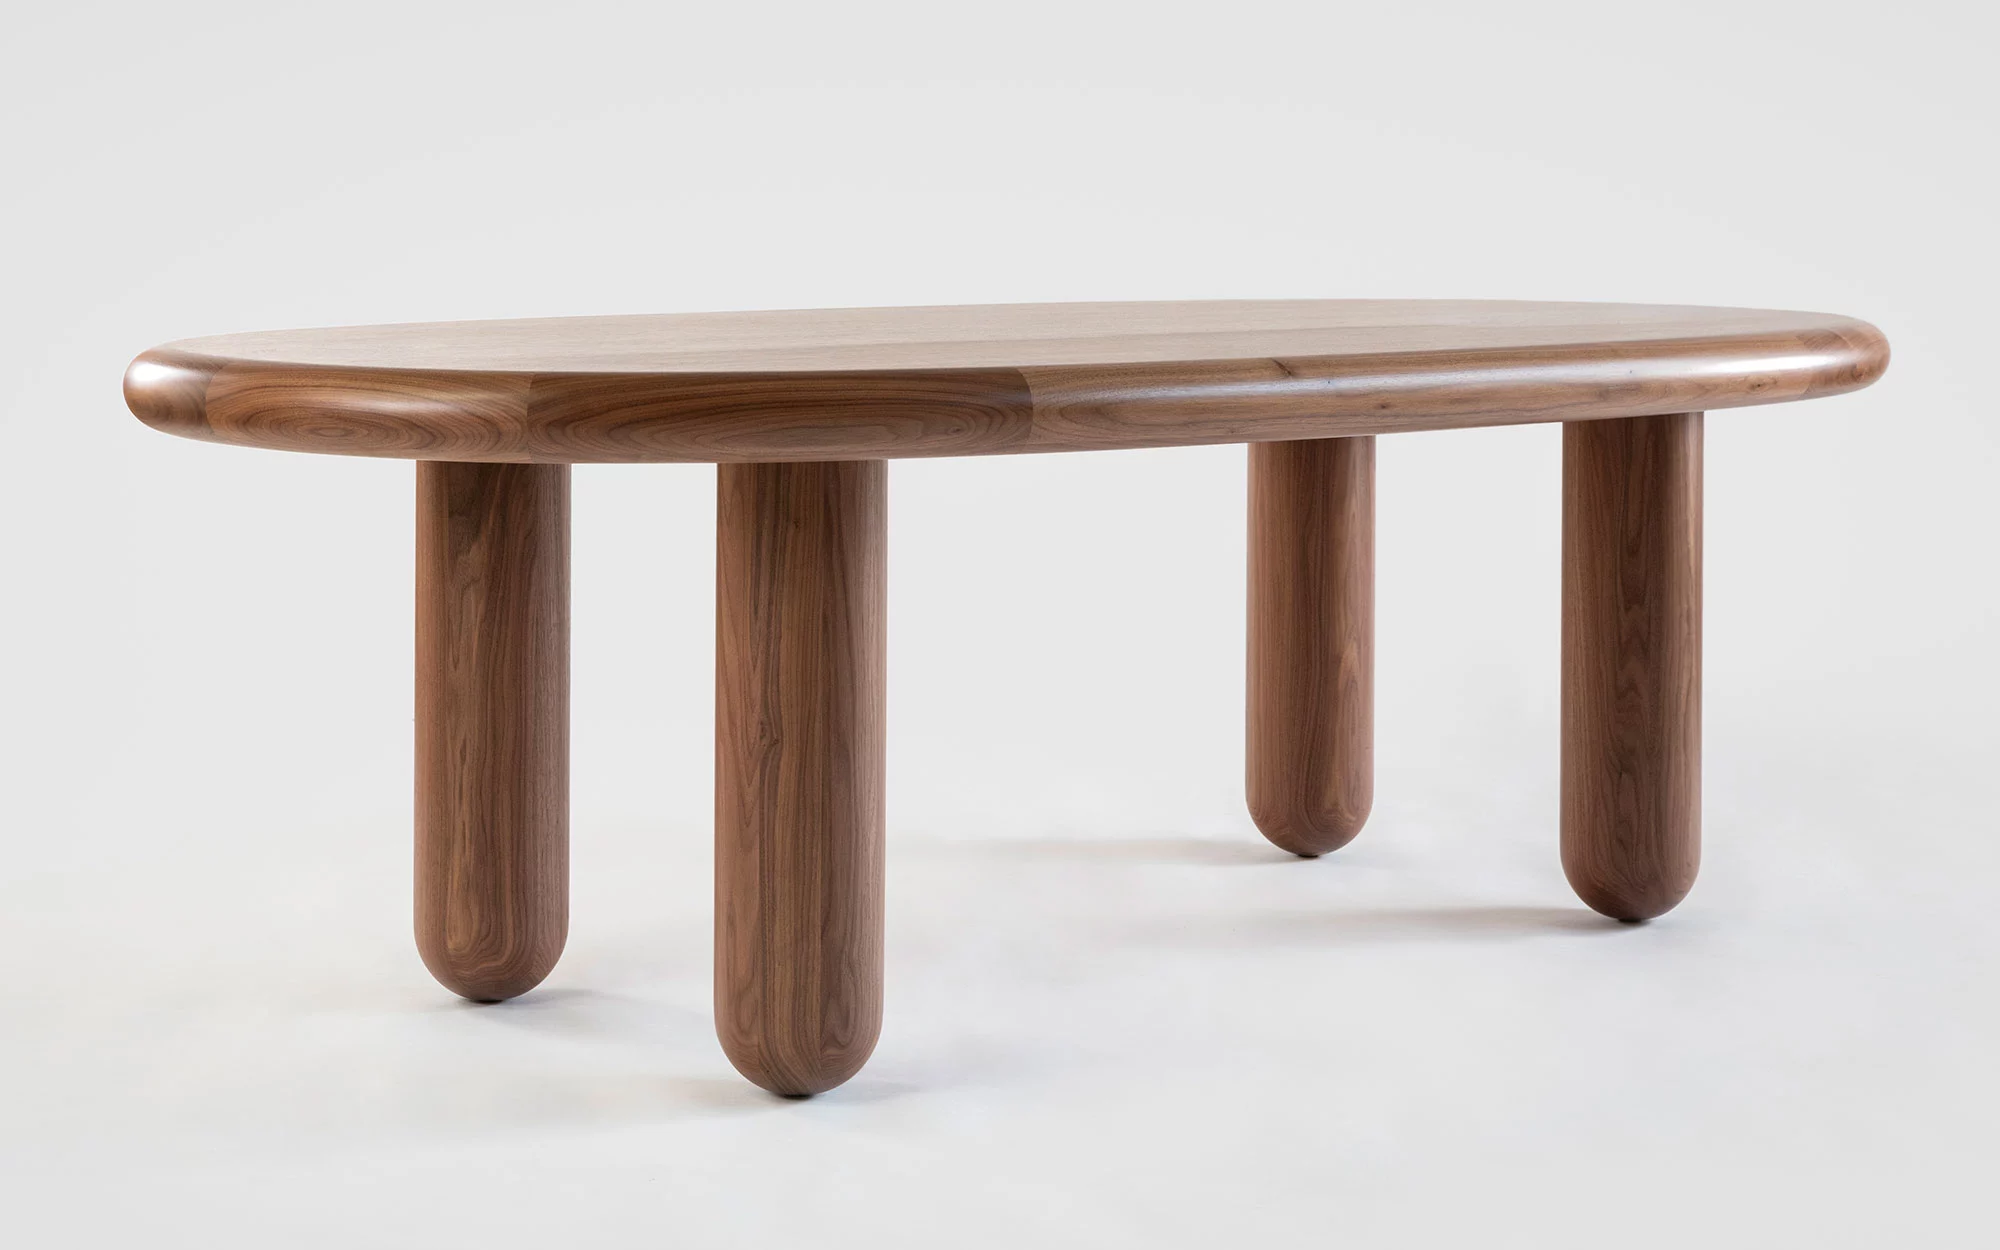 Organism oval table - Jaime Hayon - Bench - Galerie kreo